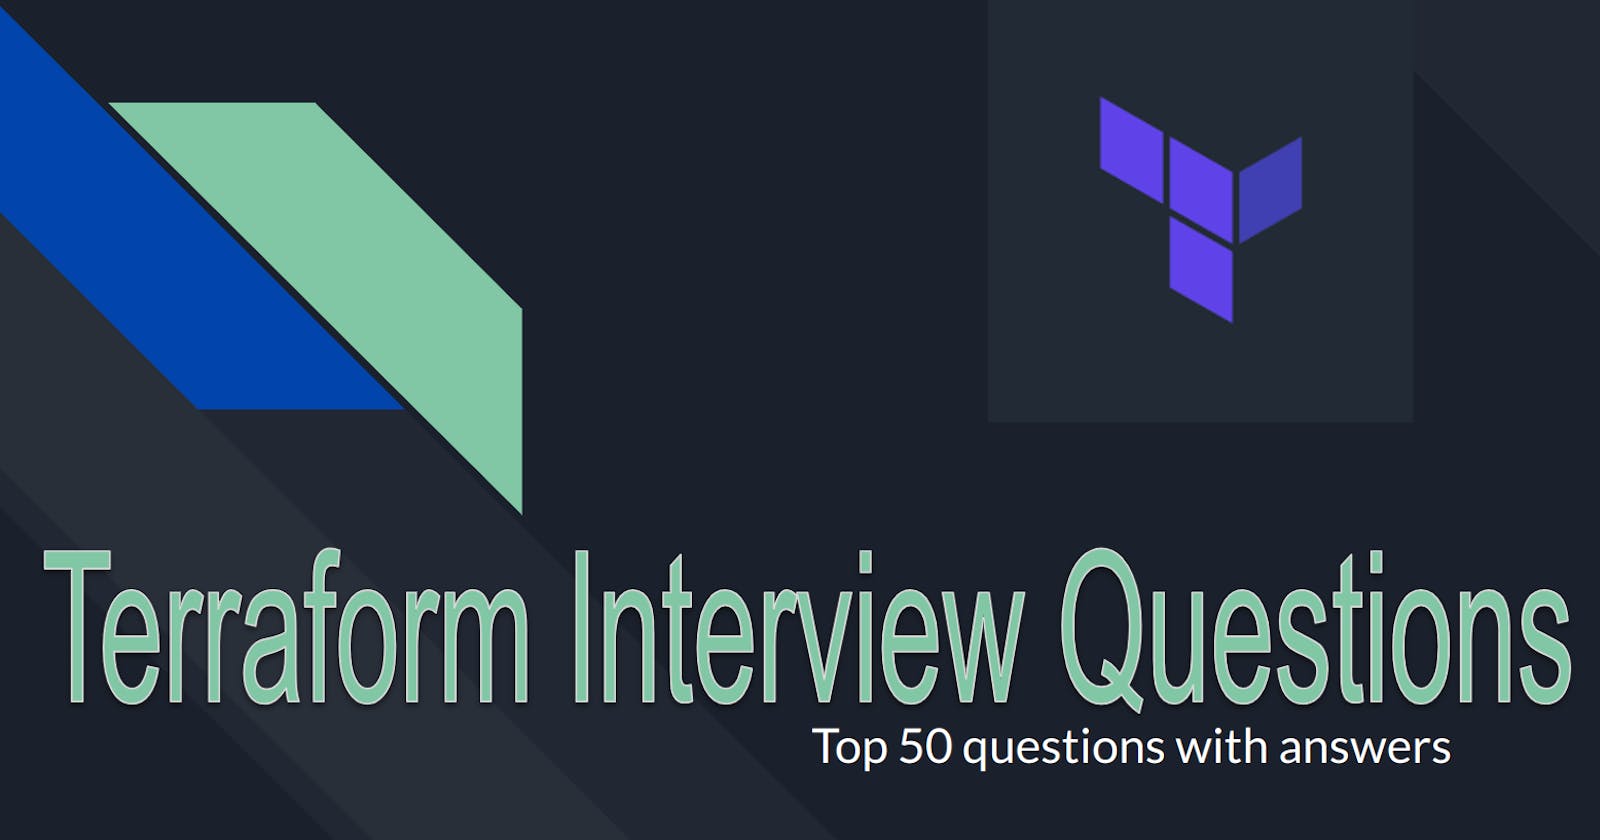 Day 87: Terraform Interview Questions